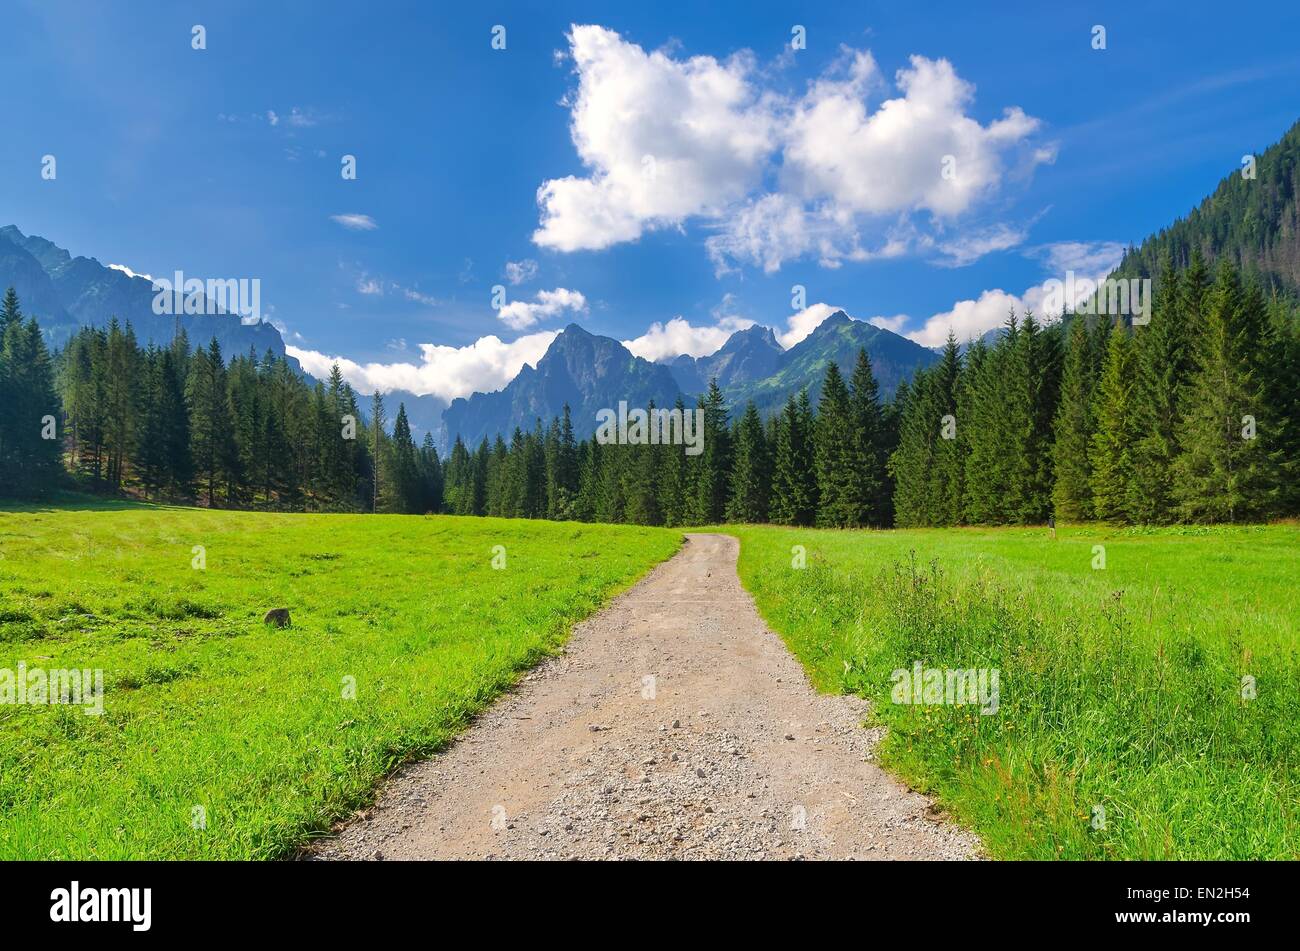 Pathway in mountains. Mountain trail running through the White Water Valley Bielovodska dolina) in Tatras, Slovakia. Stock Photo